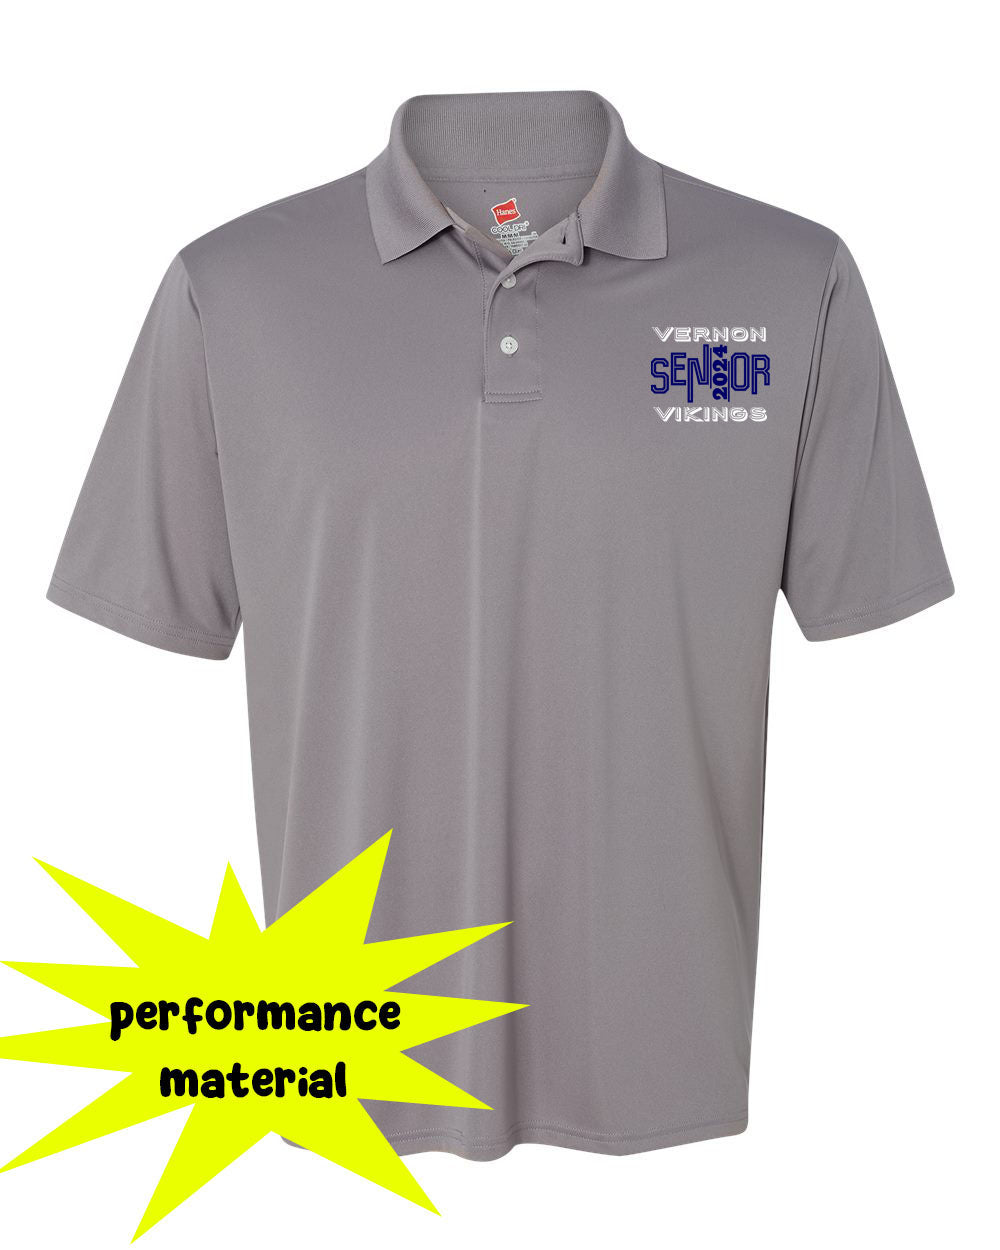 VTHS Design 6 Performance Material Polo T-Shirt